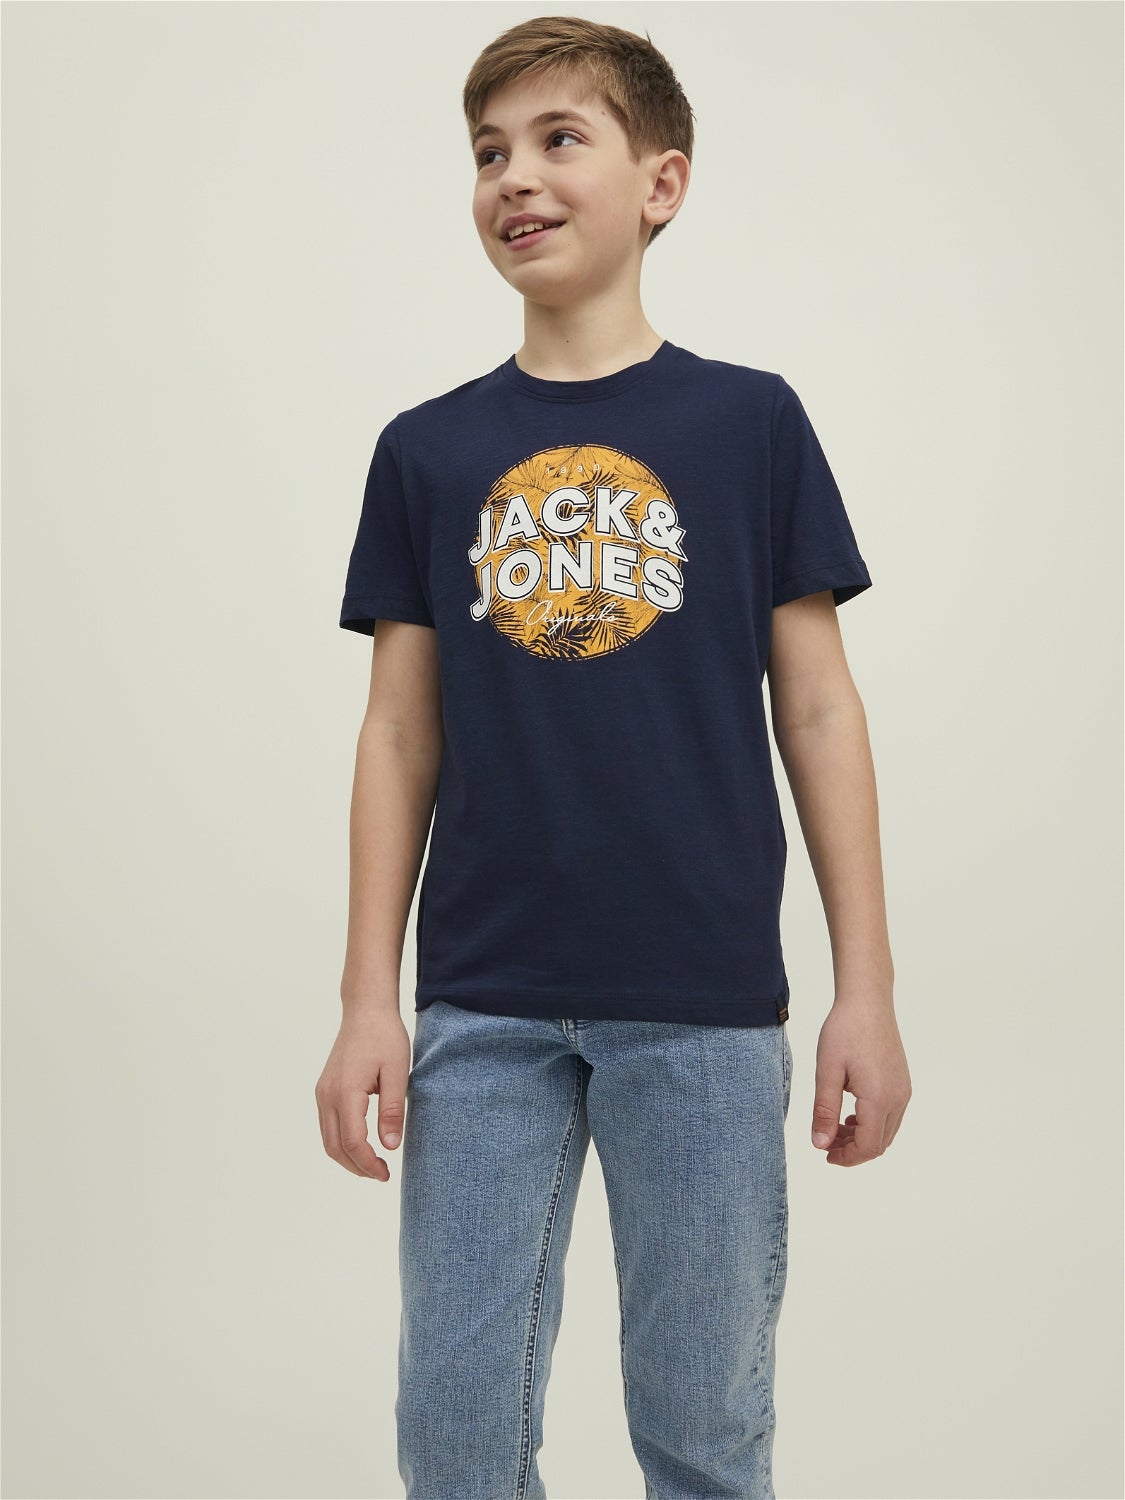 MODA BAMBINI Camicie & T-shirt Glitter Jack & Jones T-shirt sconto 50% Blu 140 